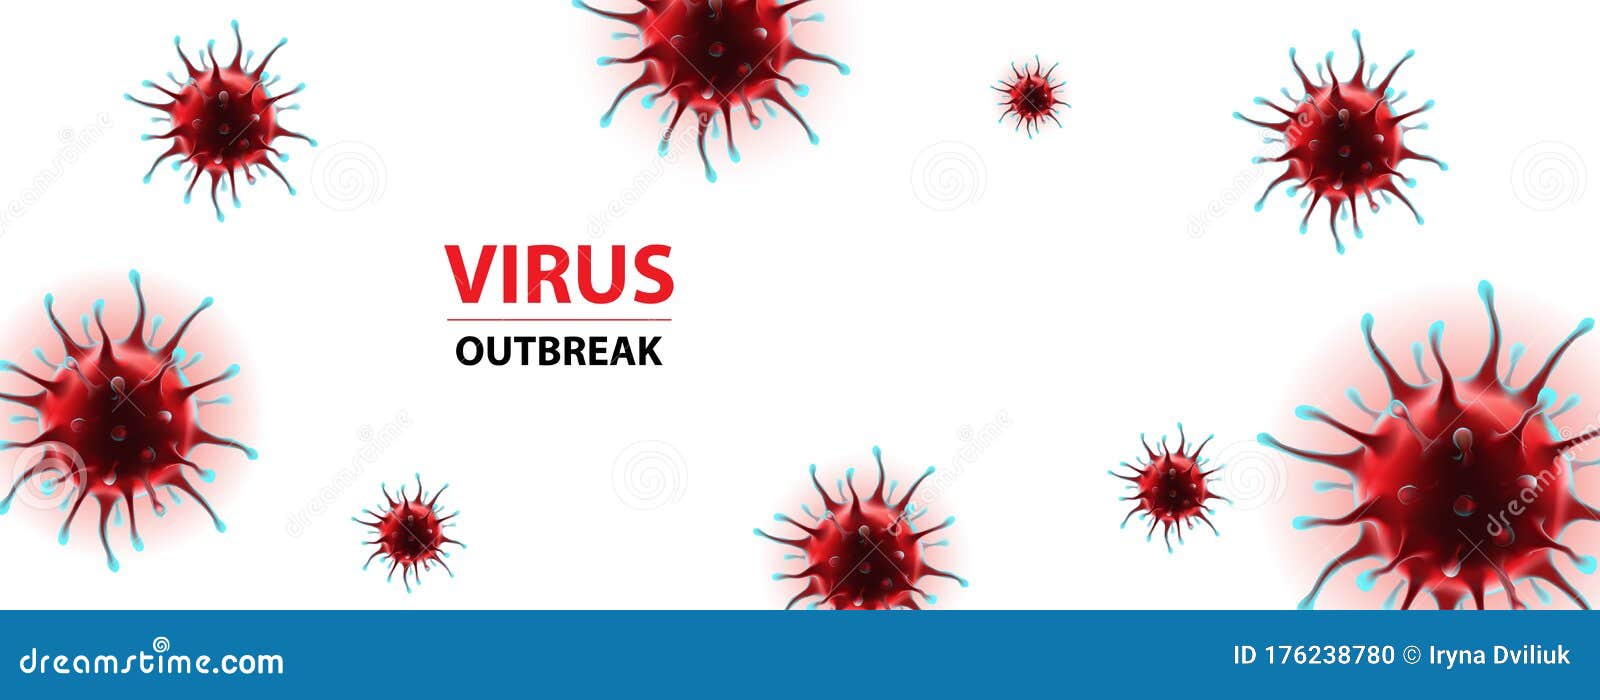 horizontal social media banner coronavirus epidemia virus 